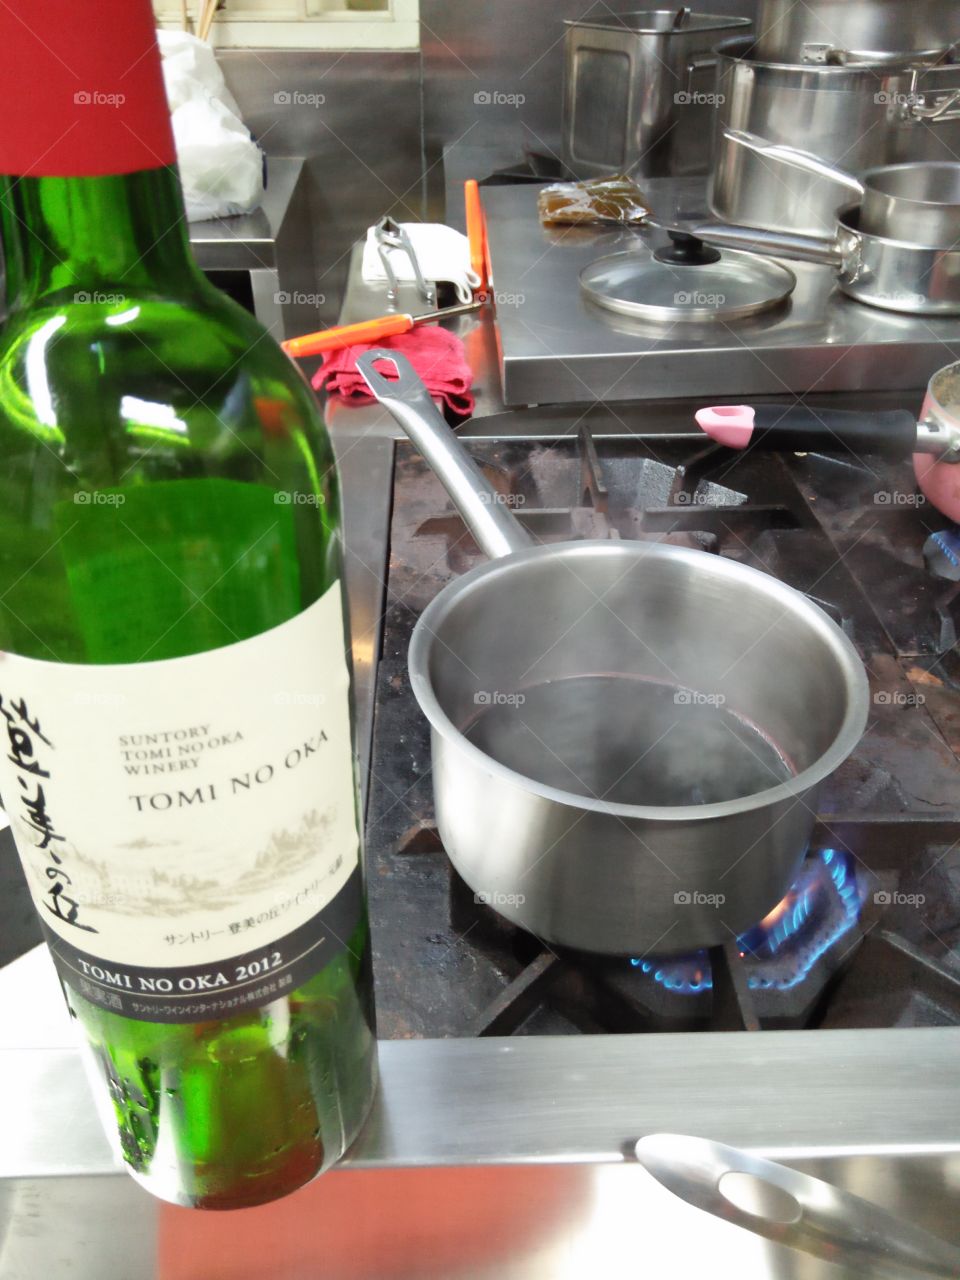 cook w/ wine